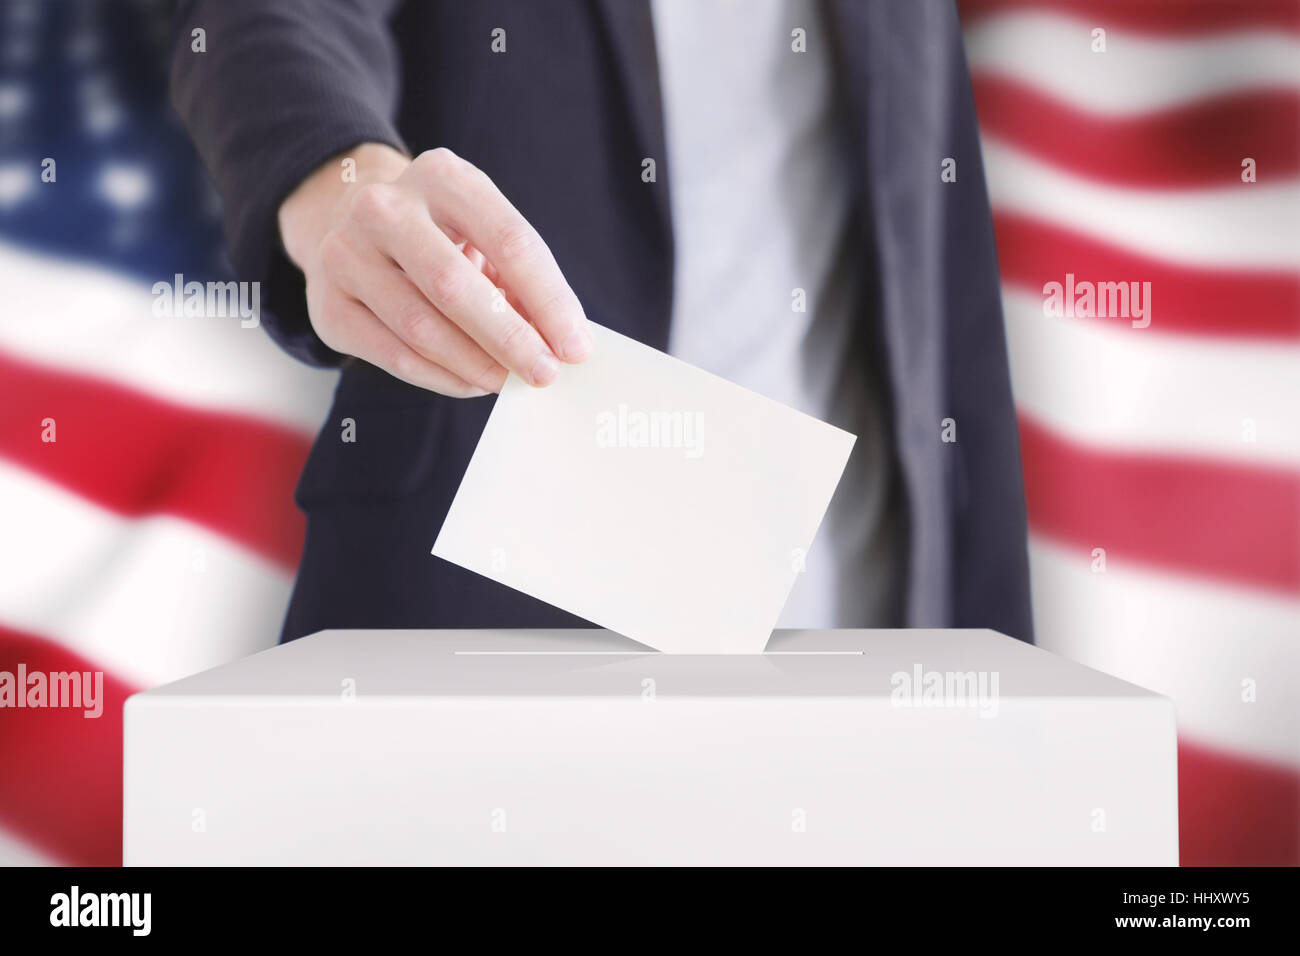 Man putting a ballot into a voting box. Toned image. Stock Photo